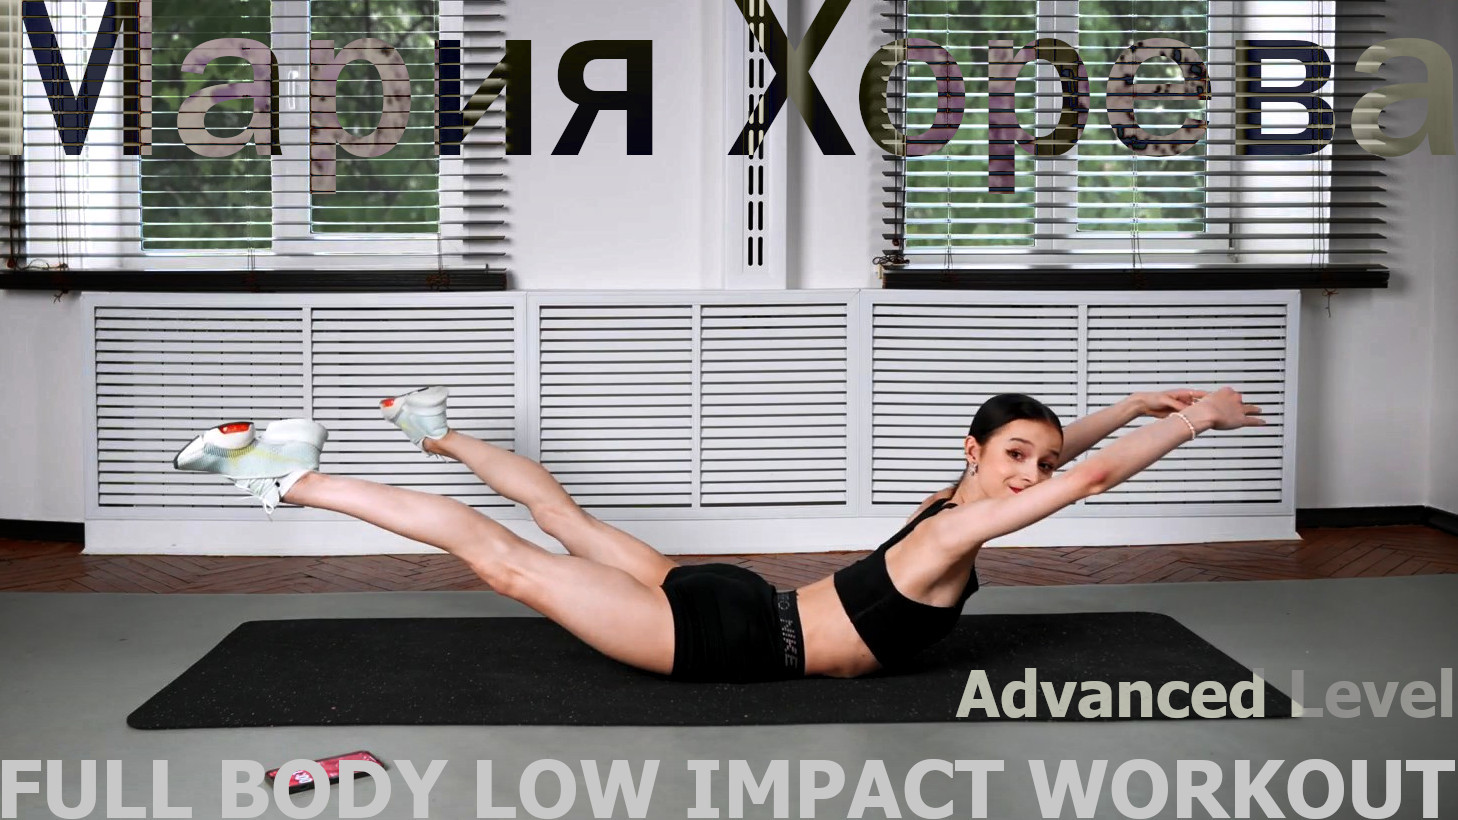 Maria Khoreva - Full Body Low Impact Workout Advanced Level